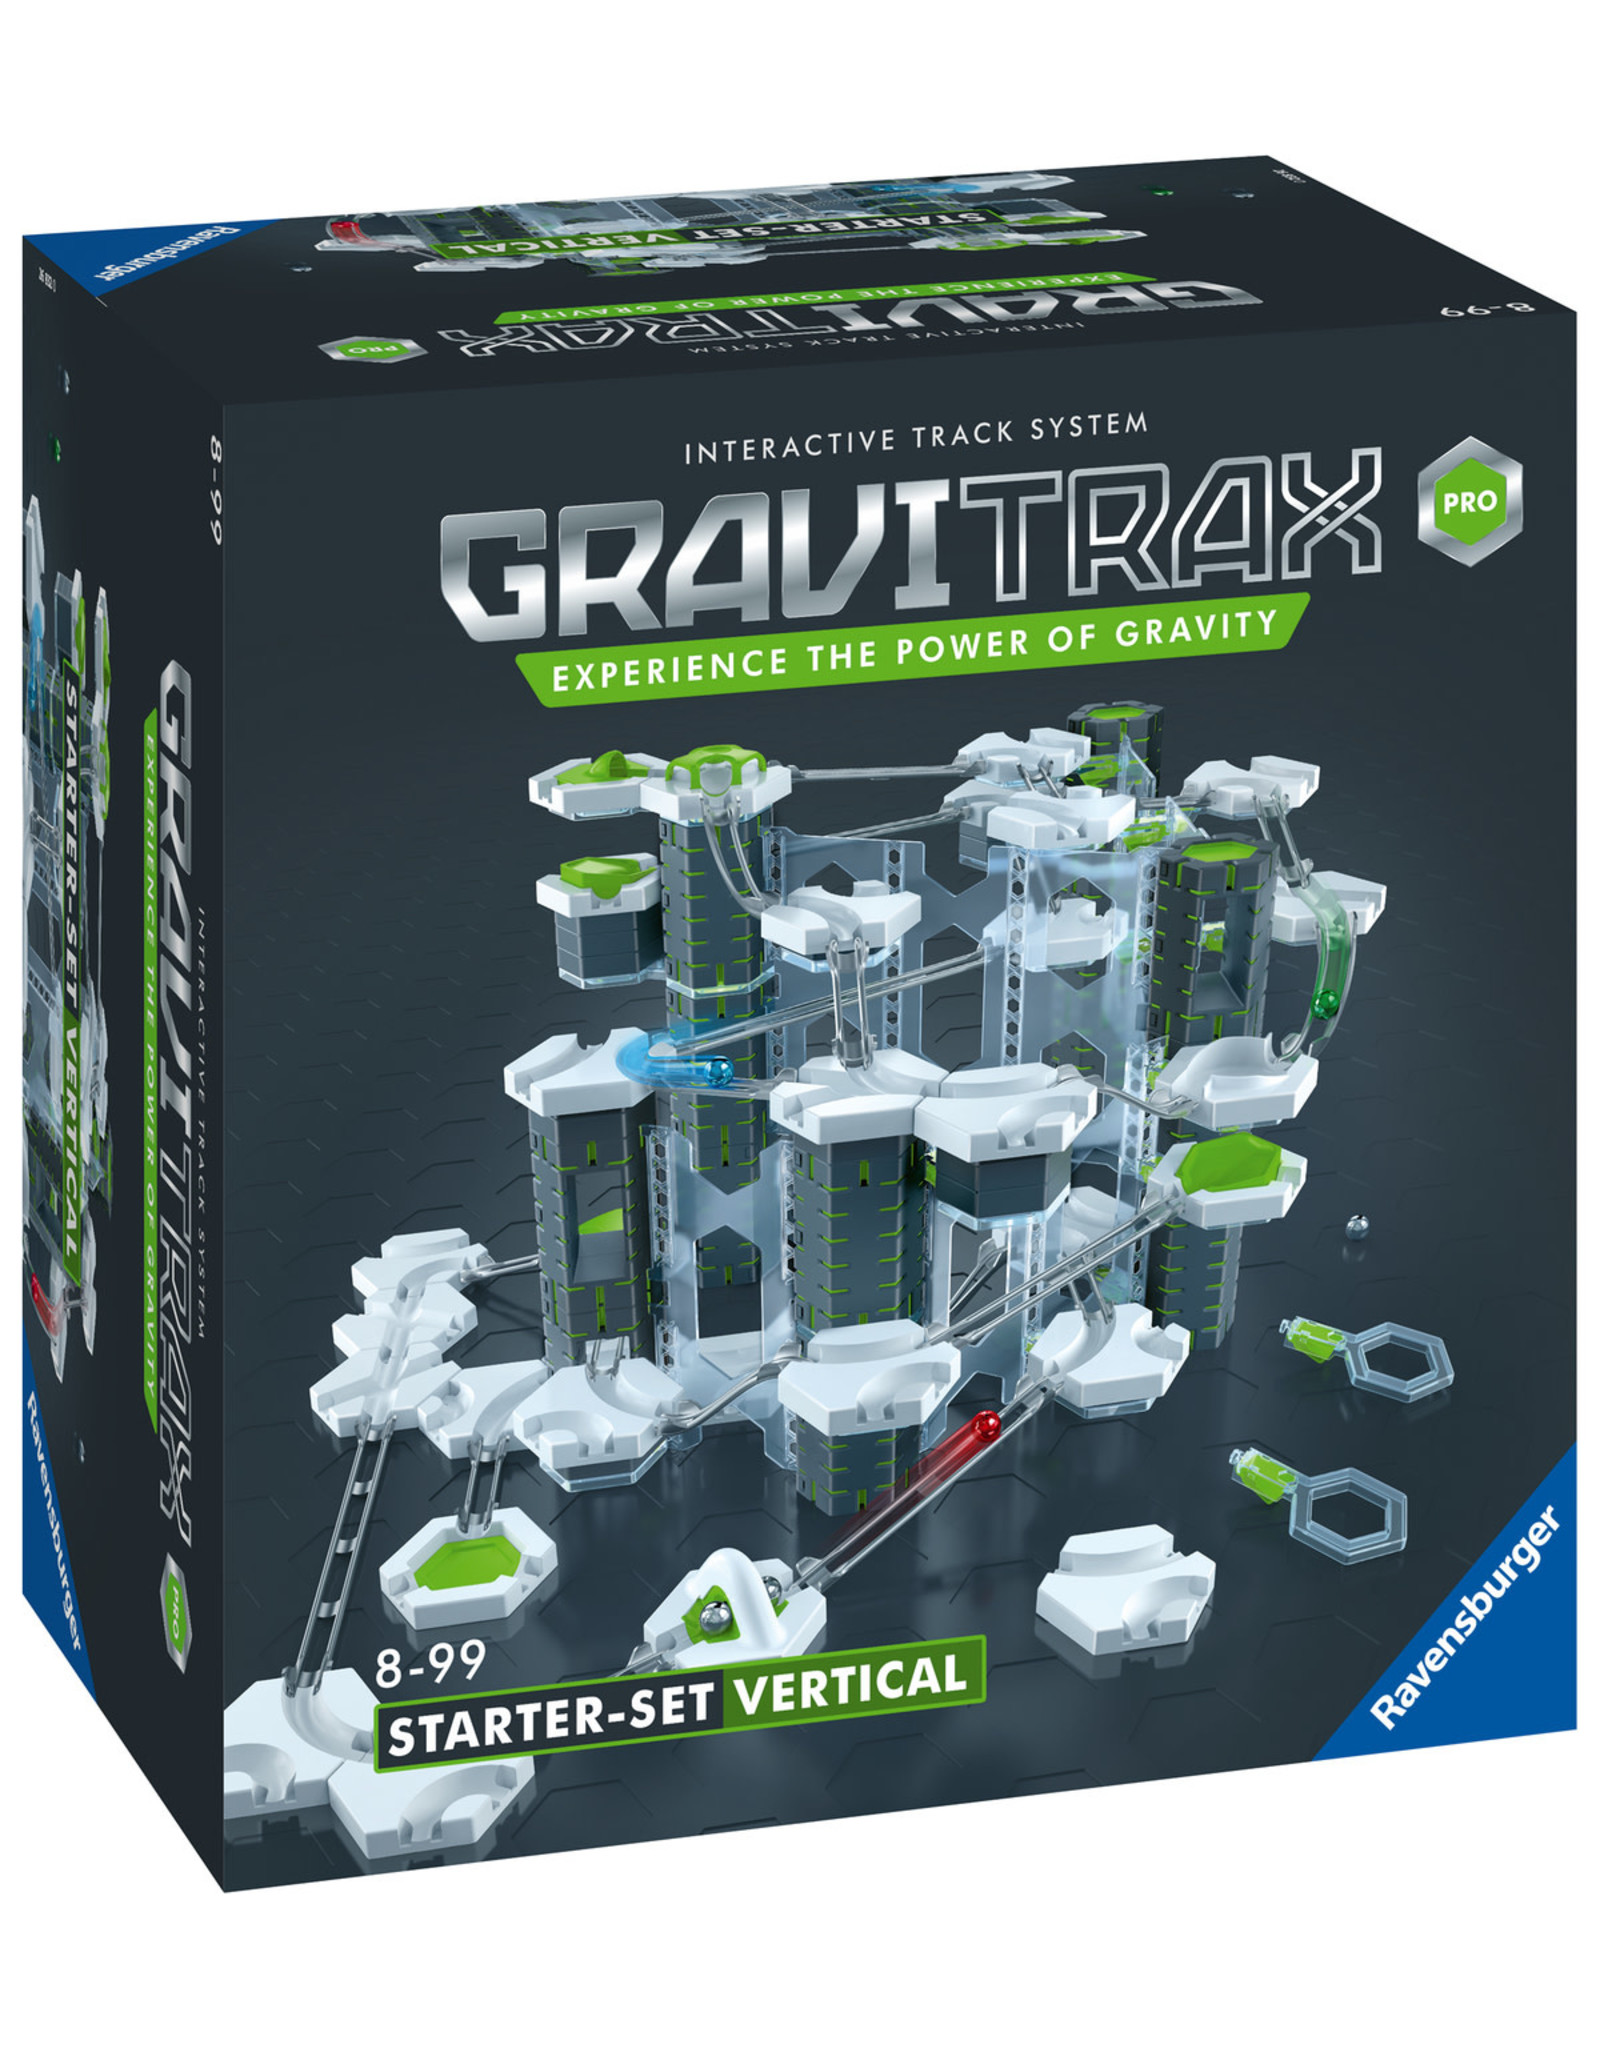 Gravitrax GraviTrax Pro Starter Set Vertical